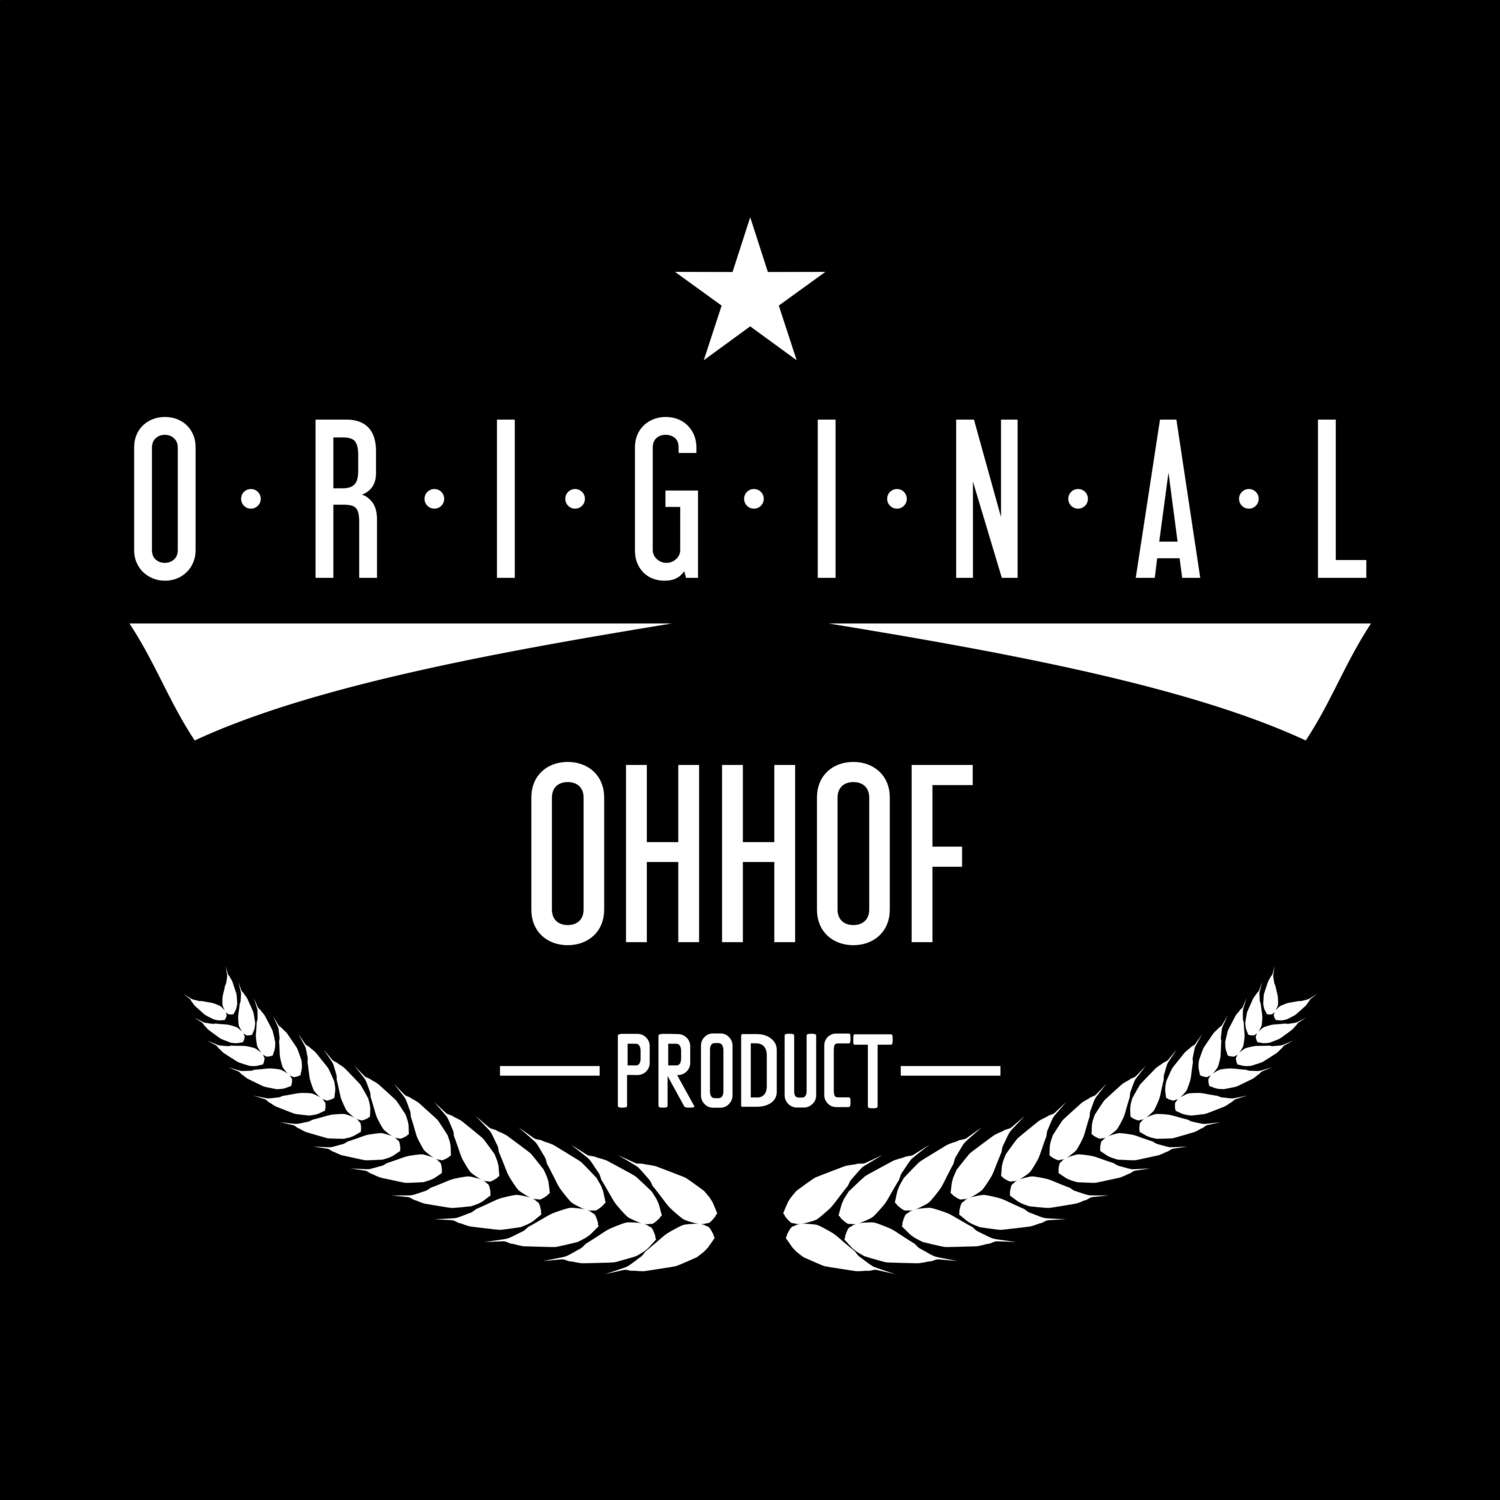 Ohhof T-Shirt »Original Product«